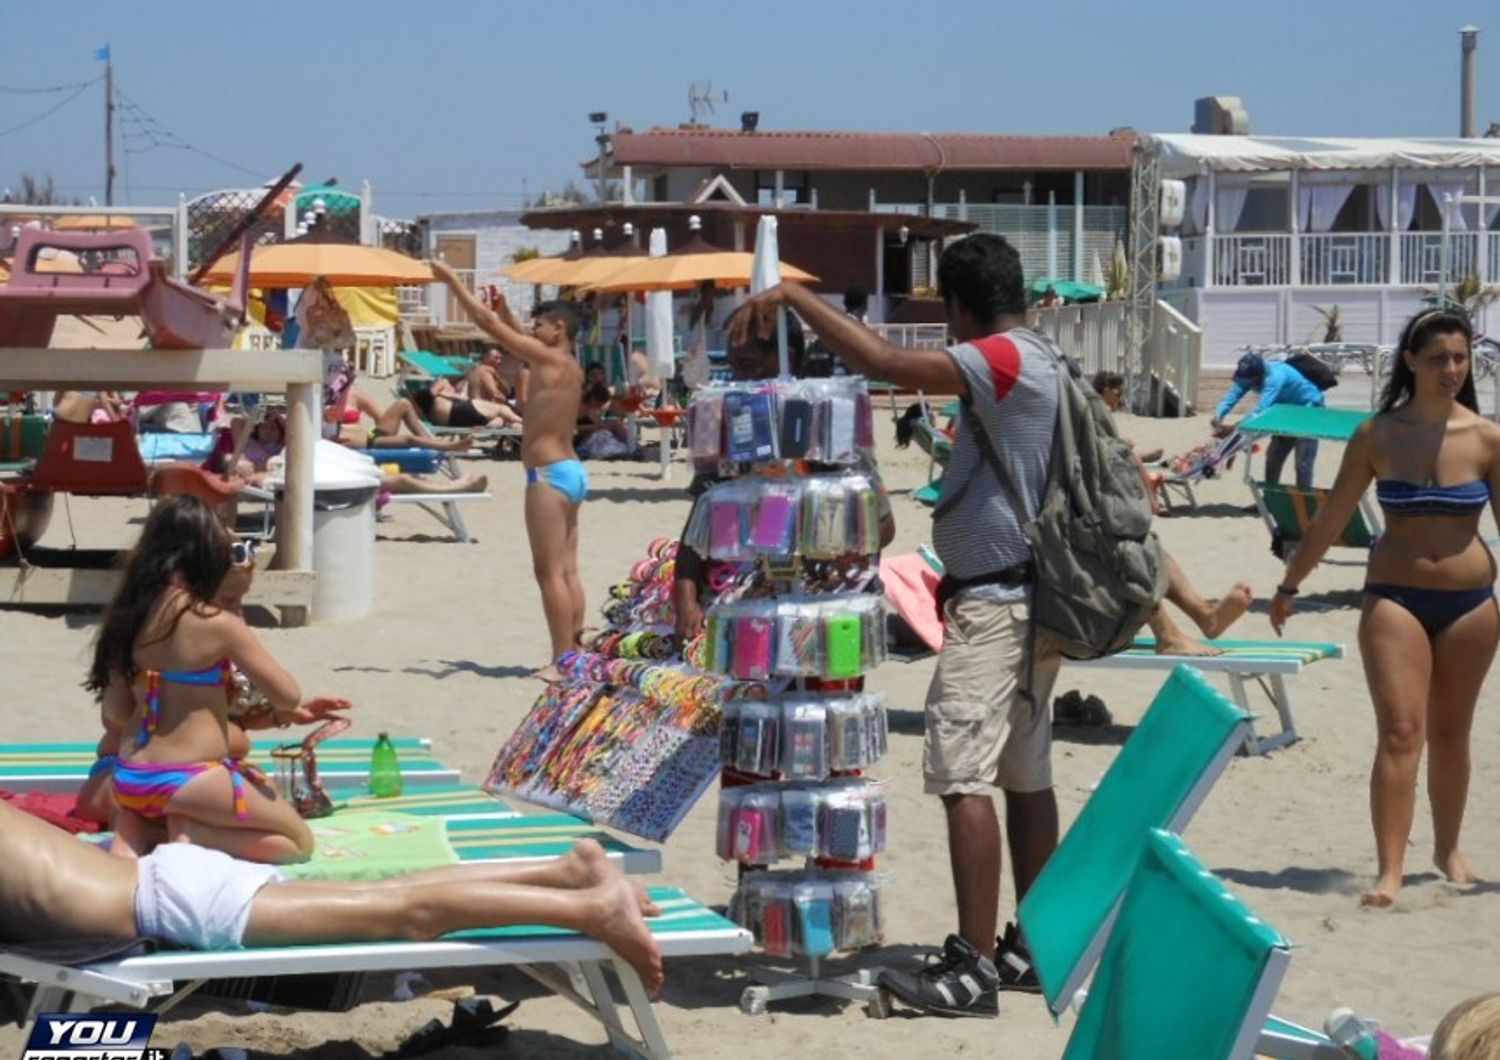 &nbsp; Spiaggia affollata lido estate venditori ambulanti - youreporter